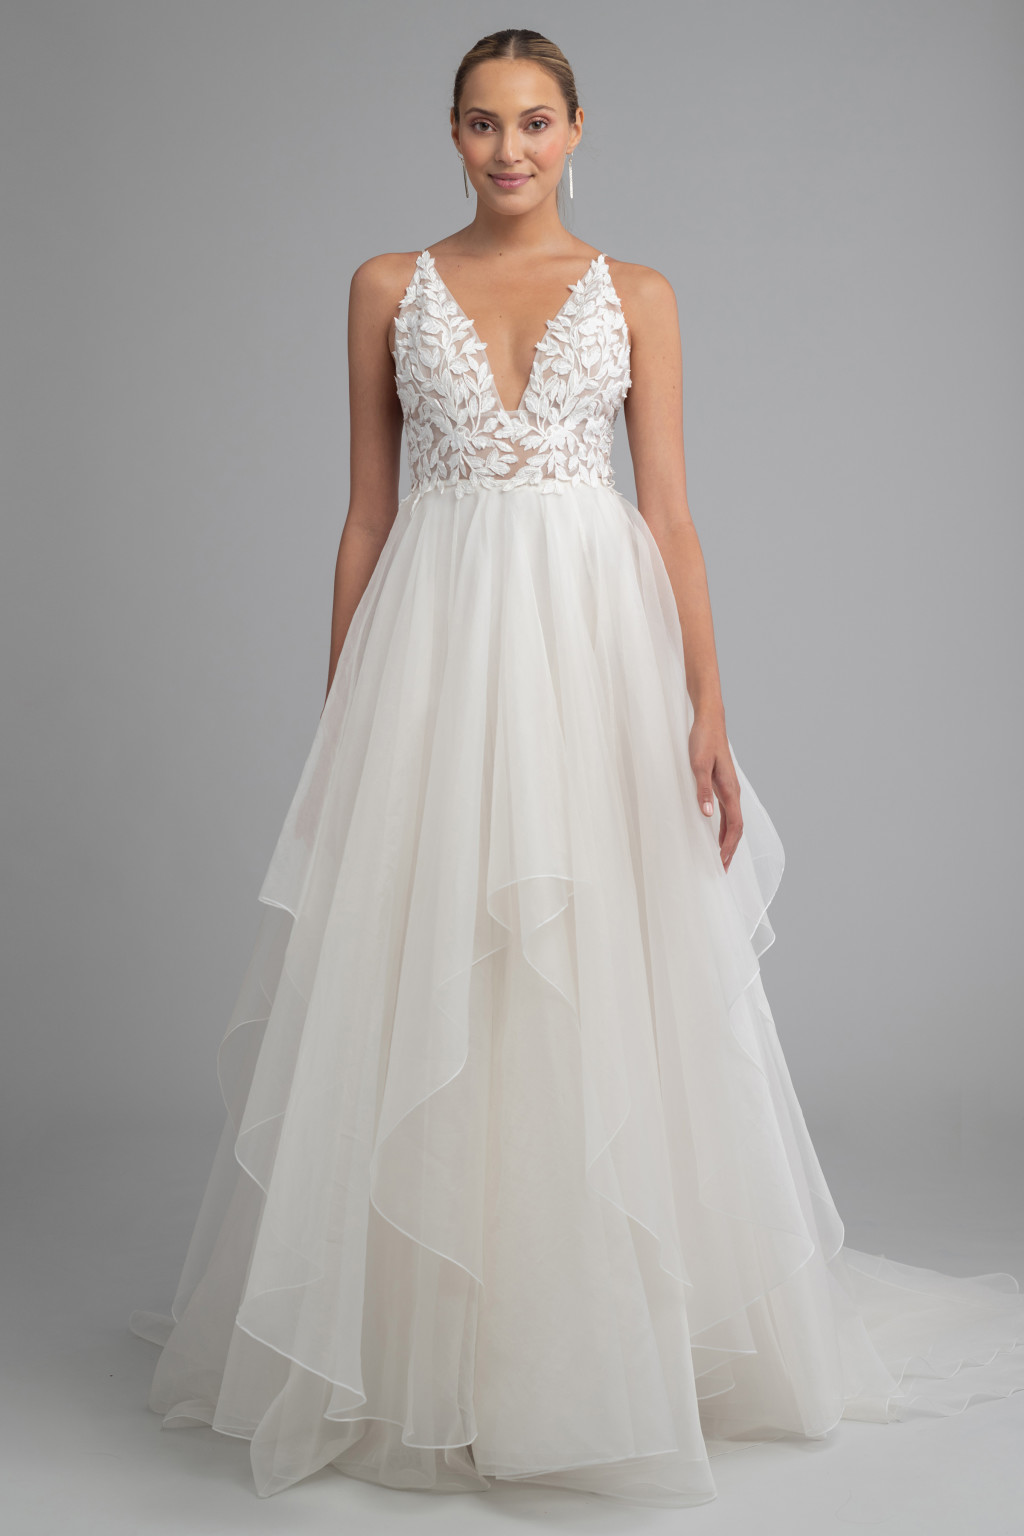 Jenny_Yoo_McKinley_Wedding_Dress_Skirt_V_Neck_A_Line_front2_2400x3600